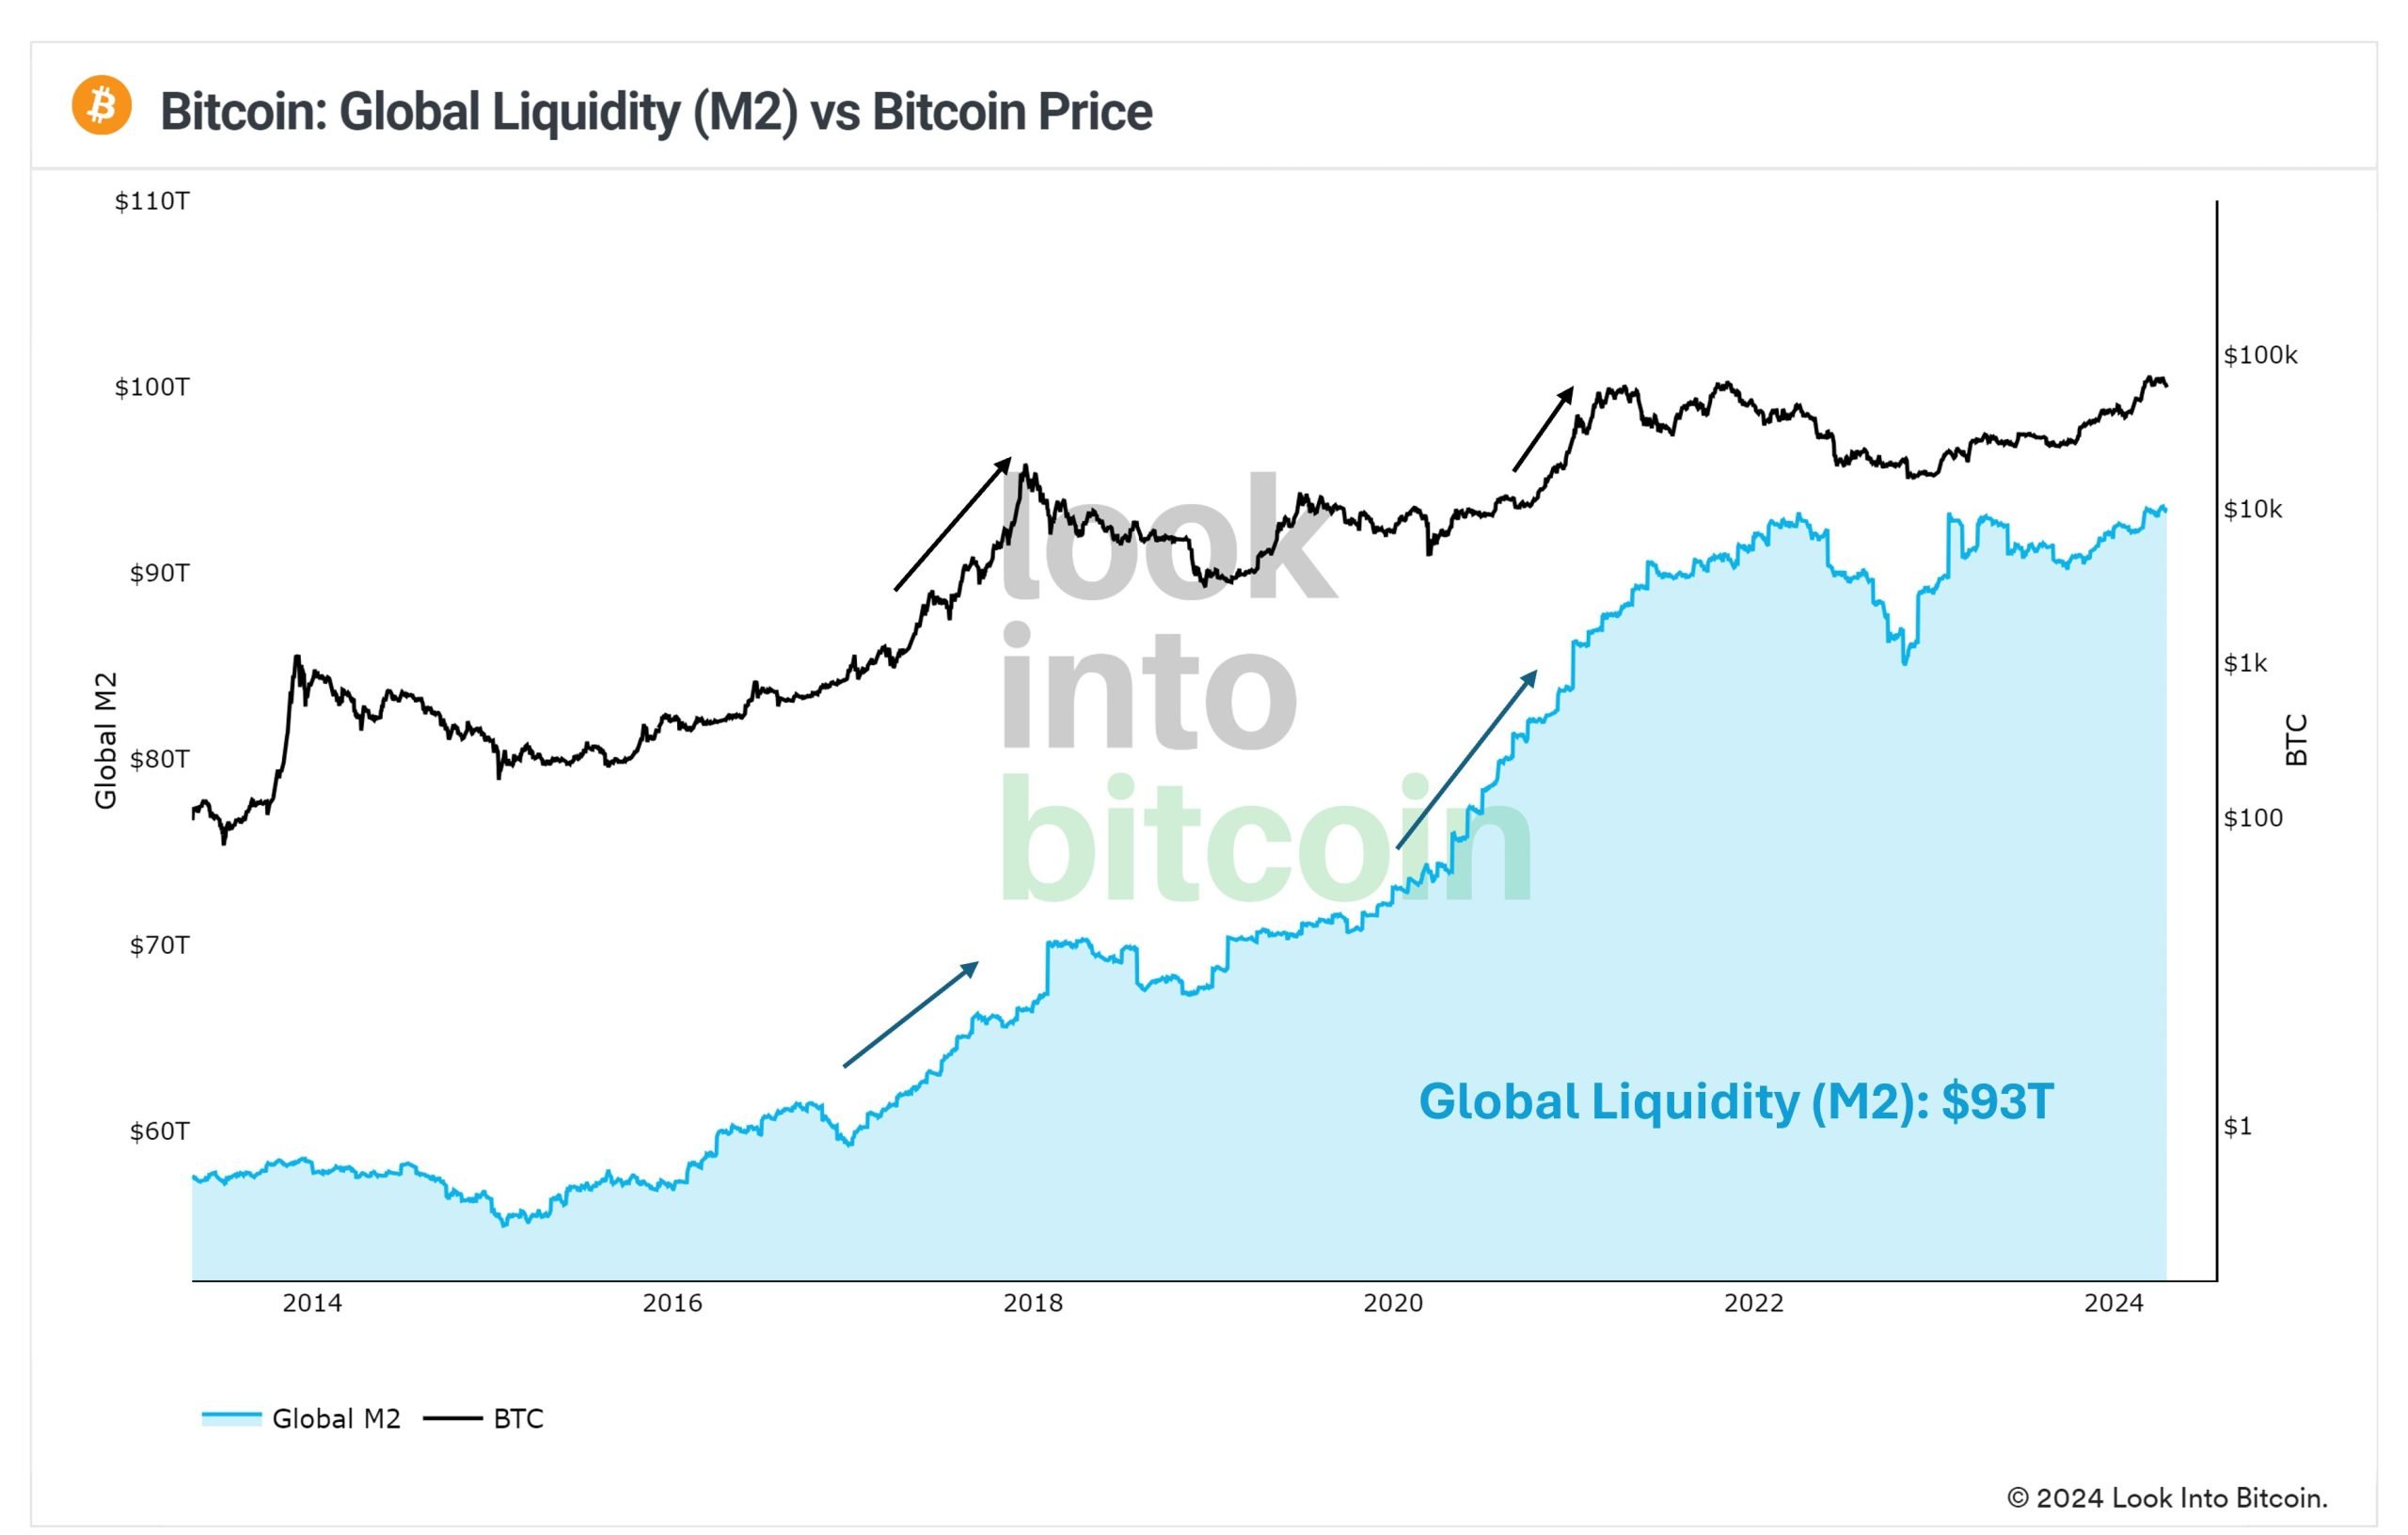 Global Liquidity versus Bitcoin price